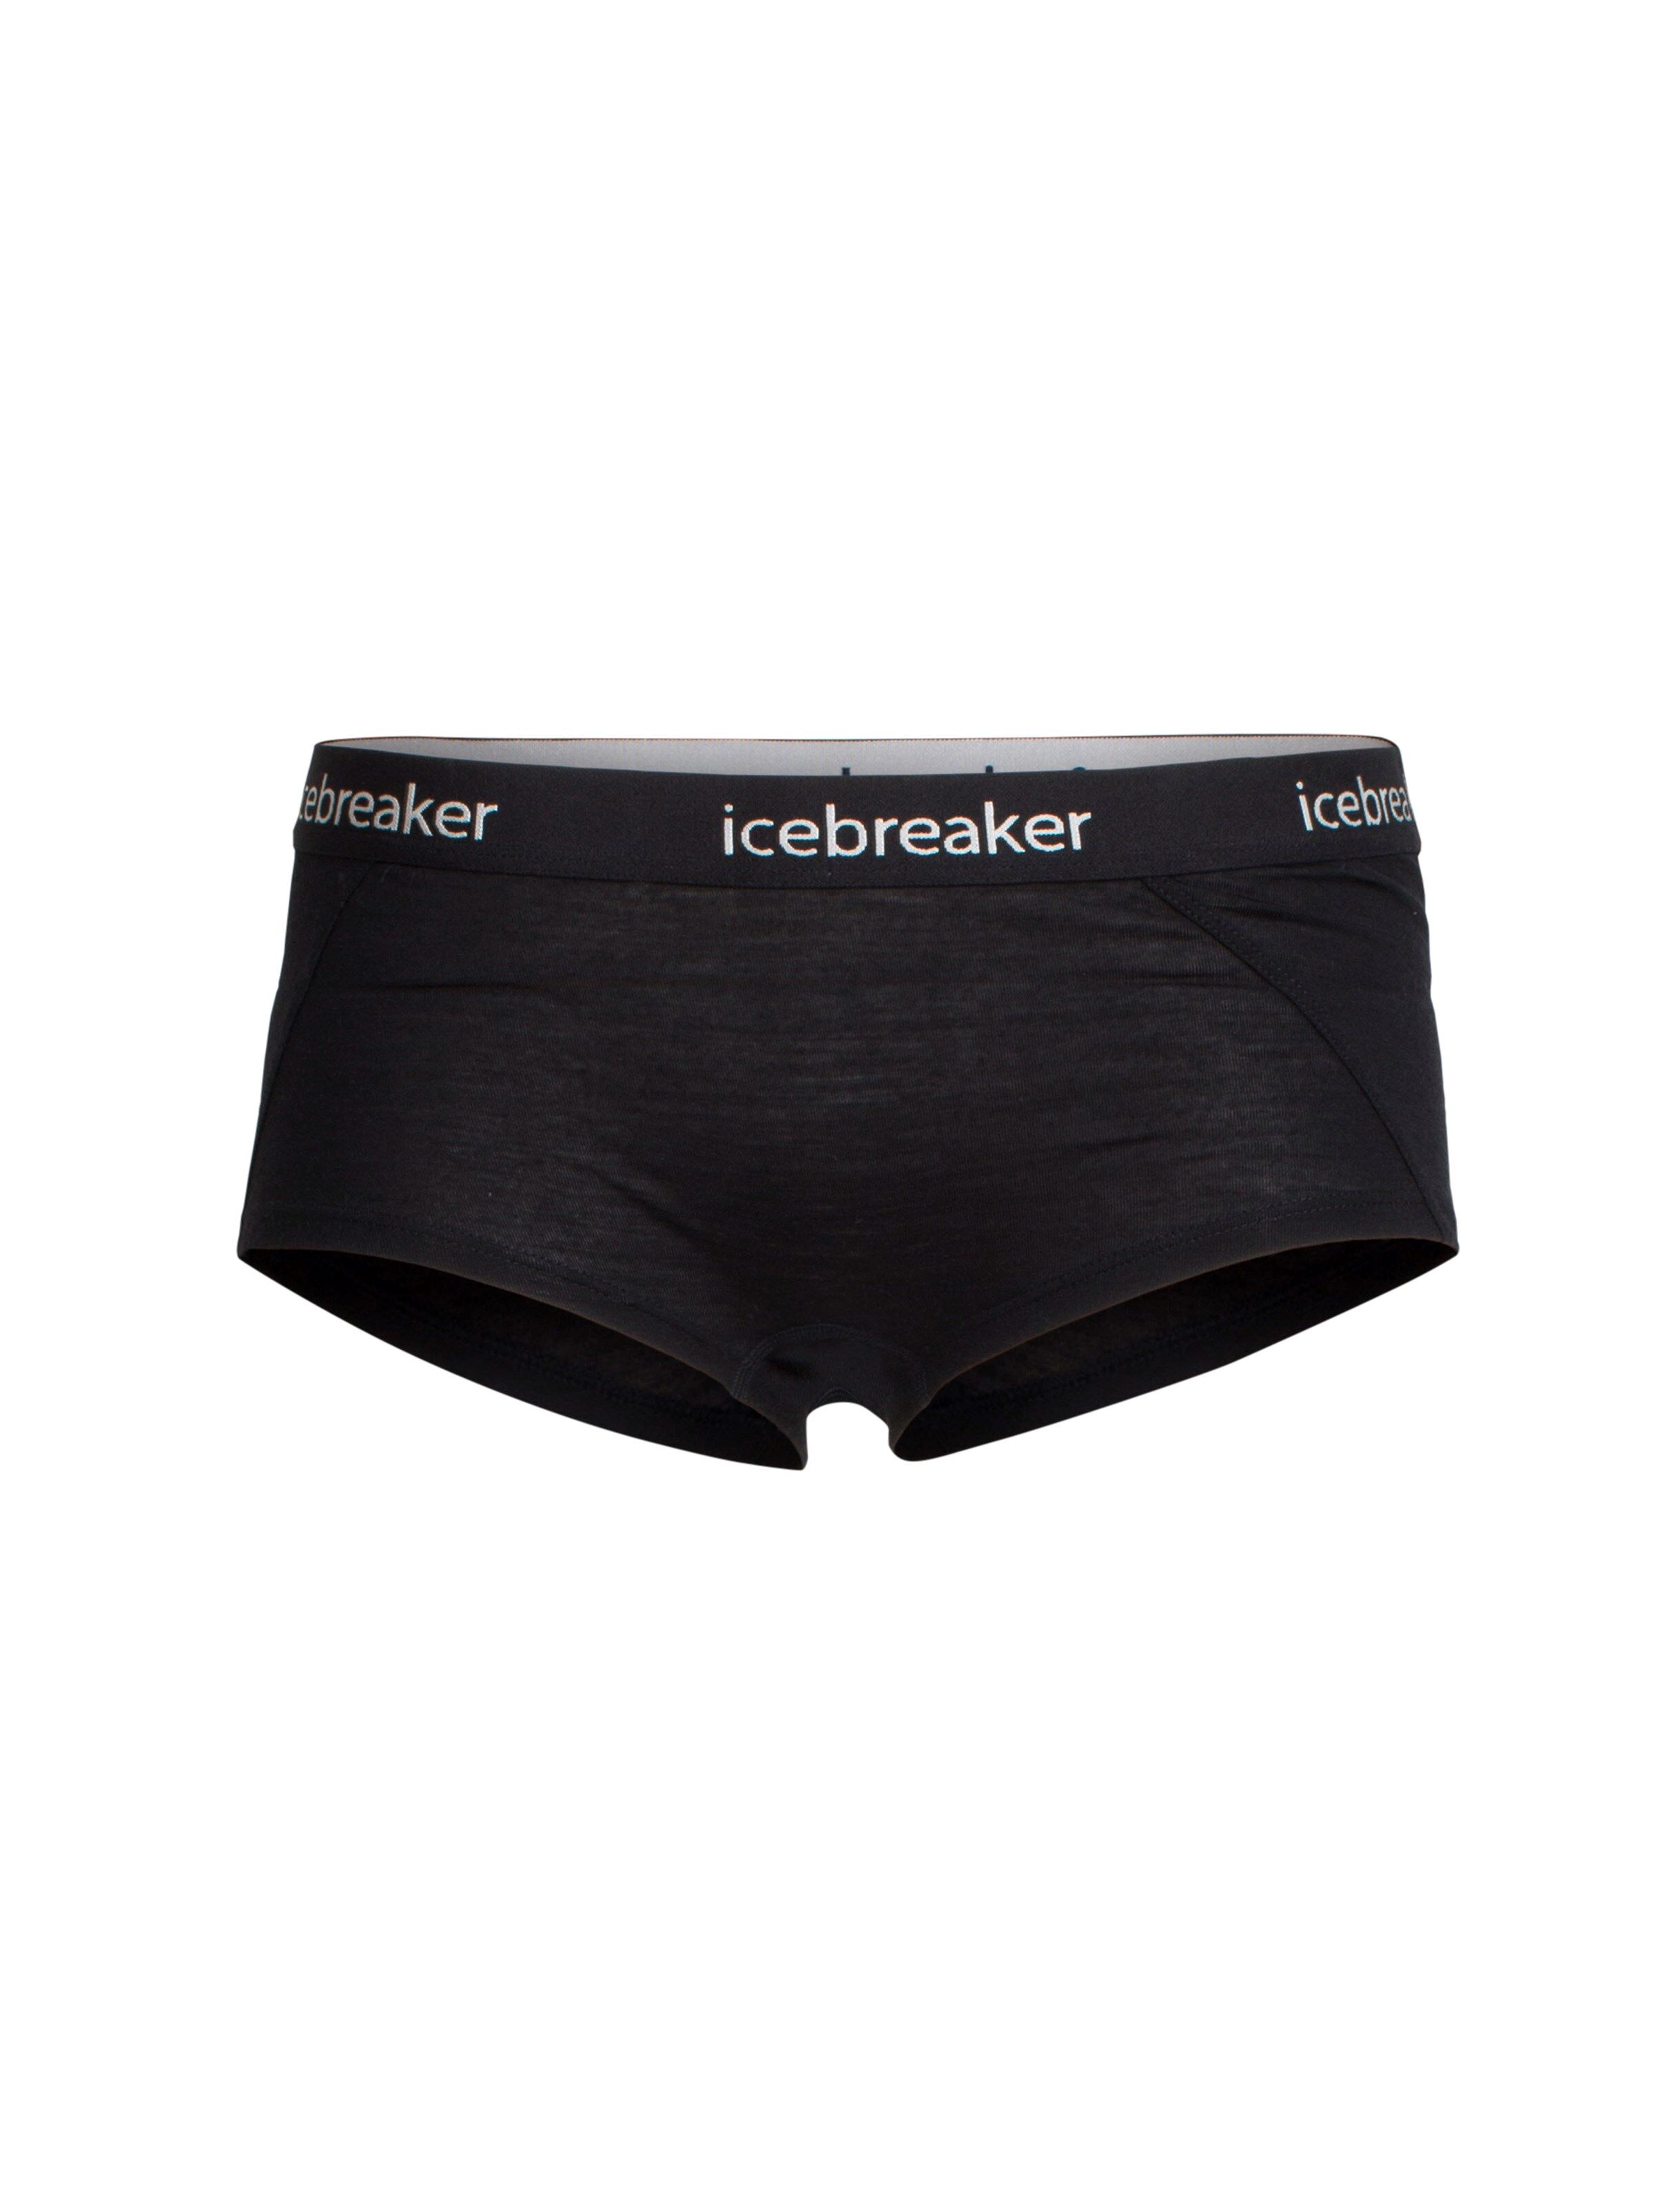 Icebreaker Sprite Hot pants, undertøy dame Black 103023001 XL 2020